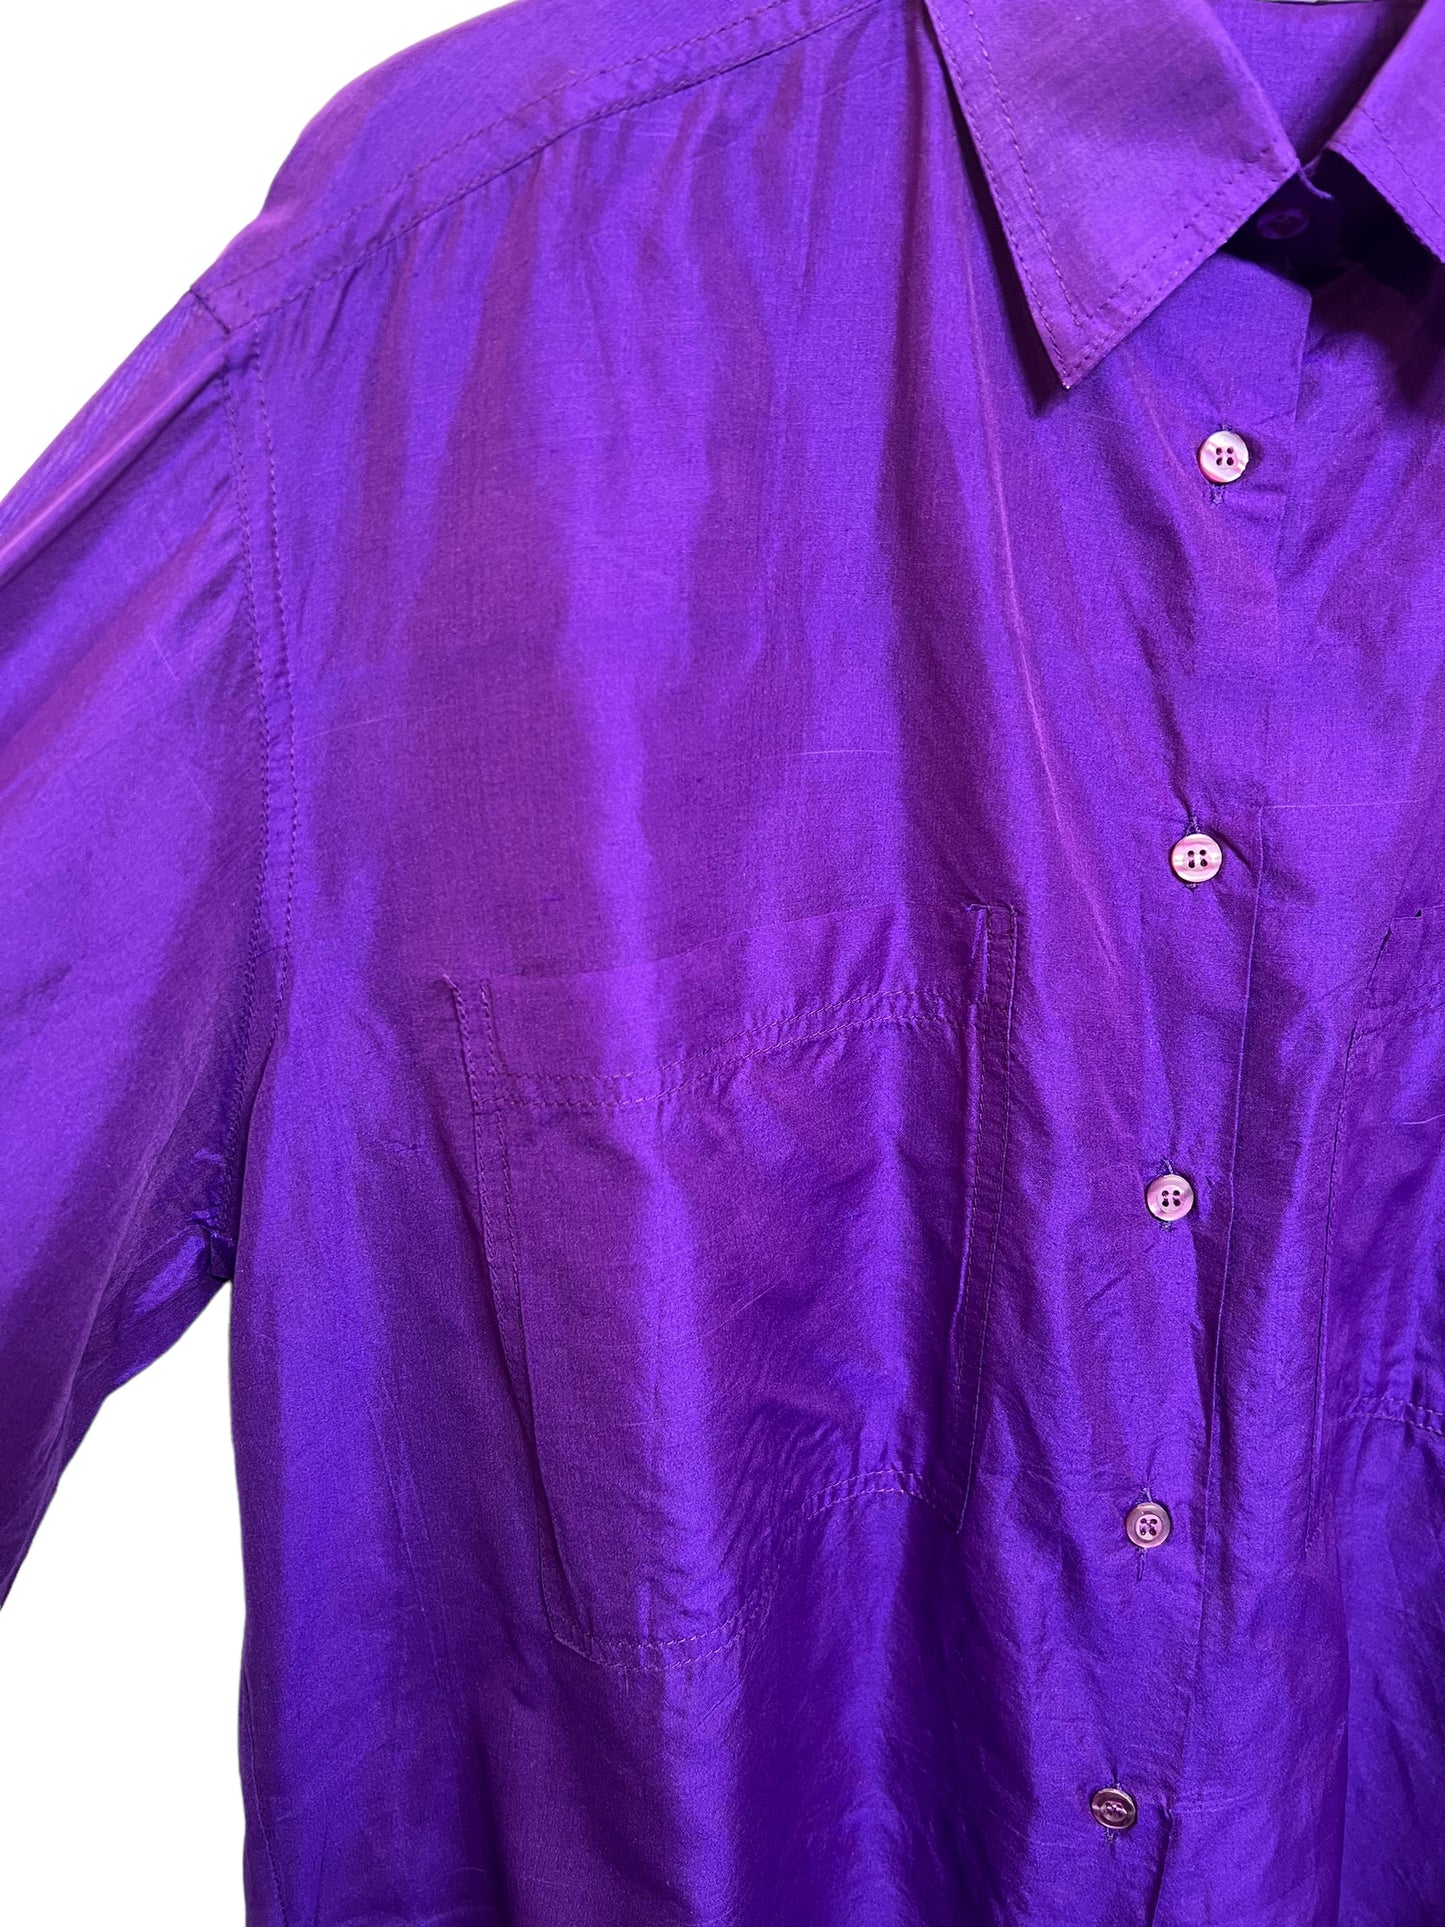 Women’s Purple Long sleeve Shirt (Size XL)